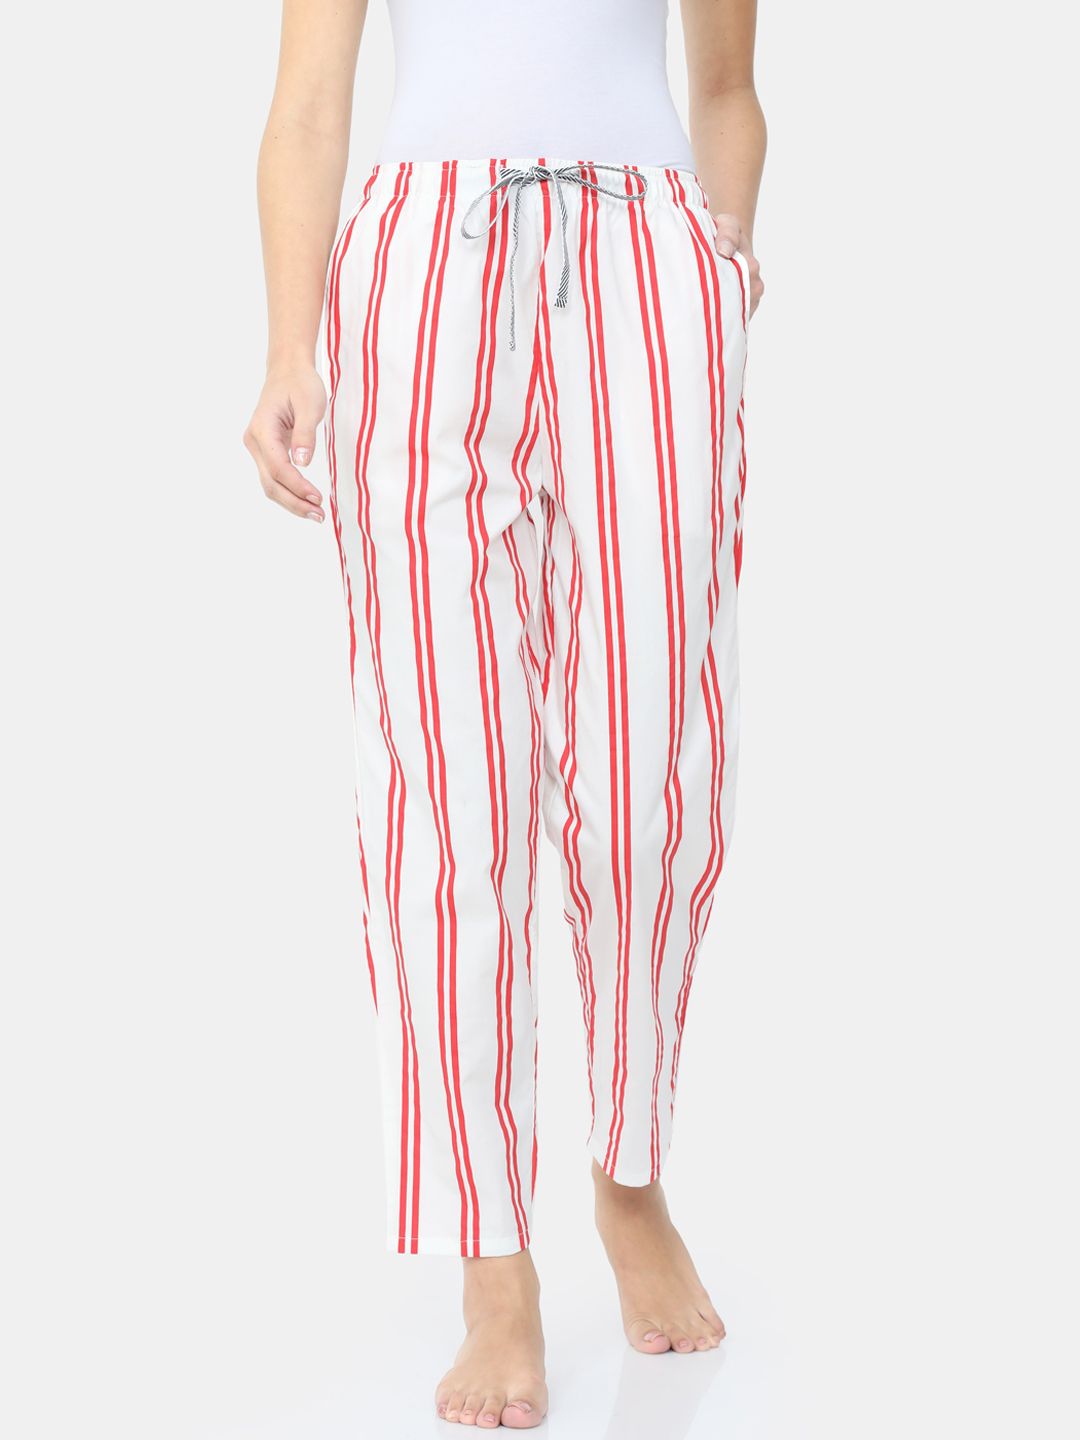 Bareblow Women White & Red Striped Cotton Lounge Pants Price in India